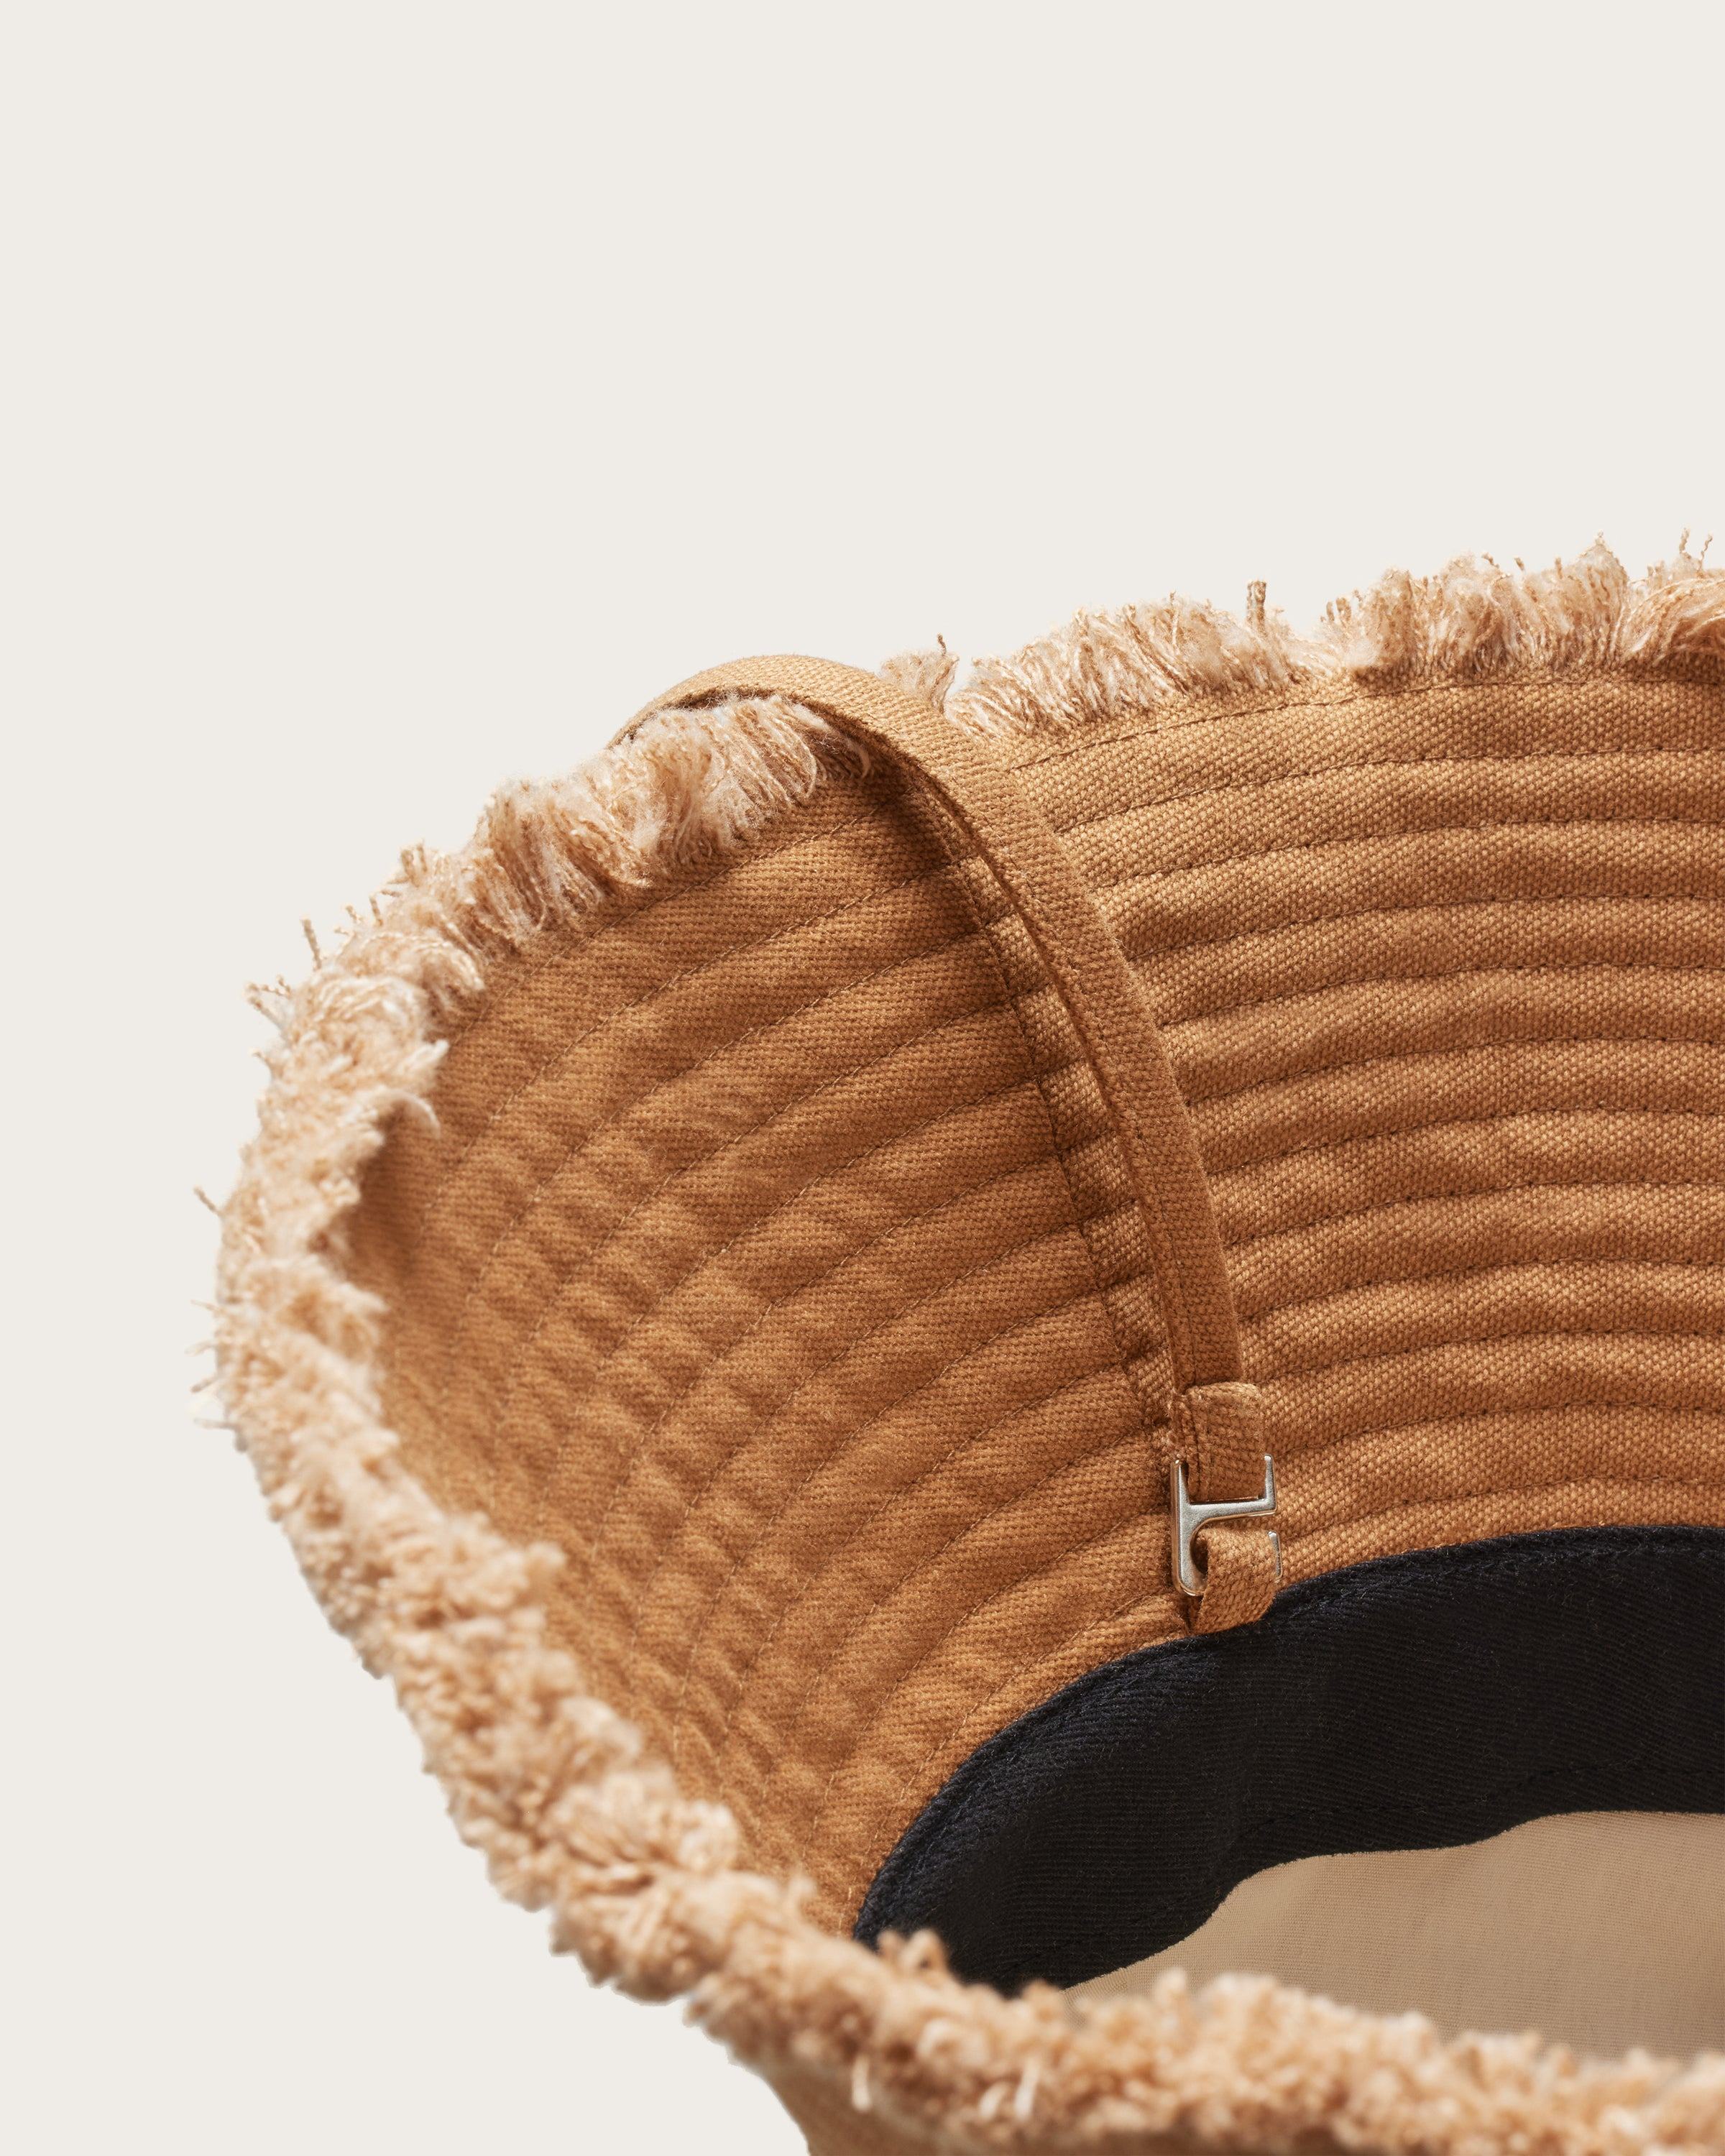 Hemlock Bali Oversized Cotton Bucket Hat in Camel removable drawstring